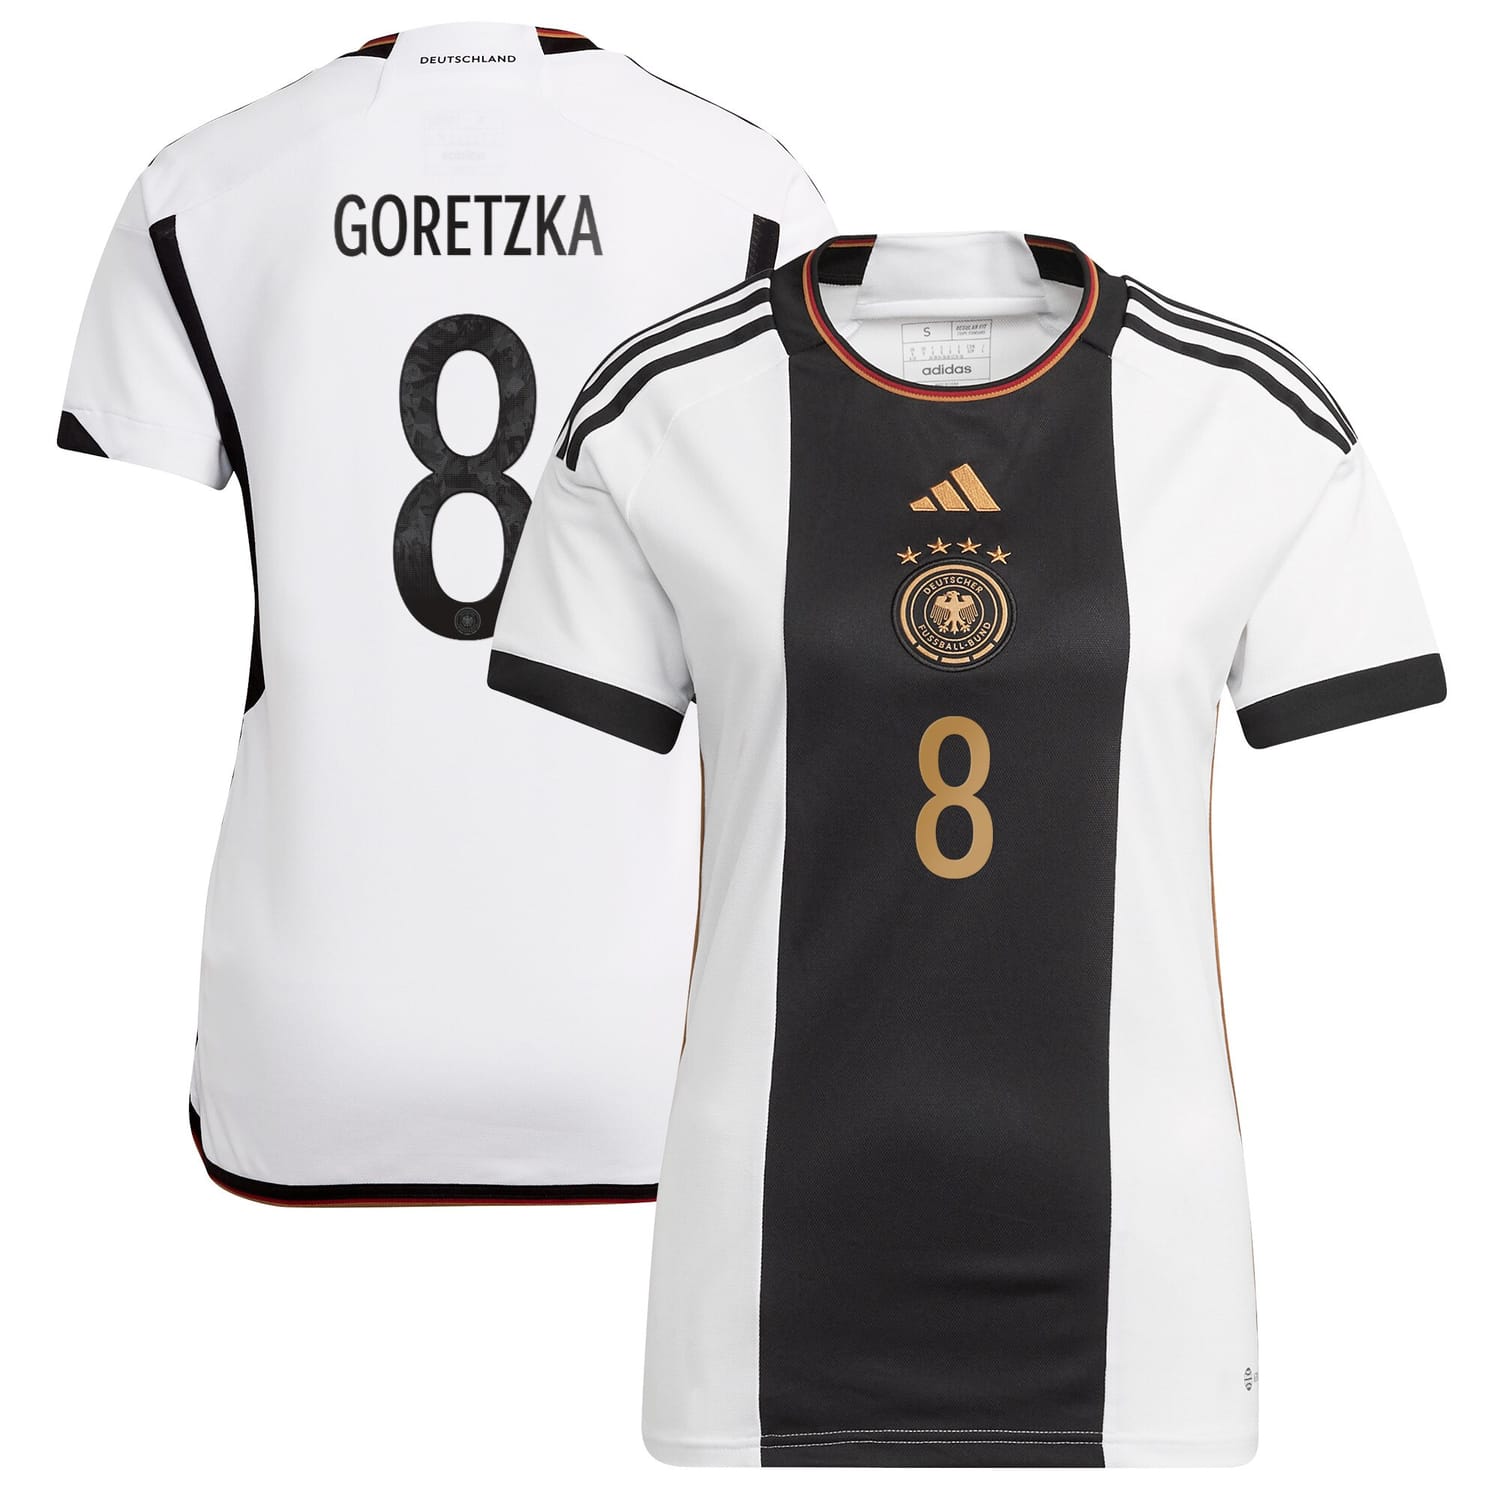 Germany National Team Home Jersey Shirt player Leon Goretzka 8 printing for Women